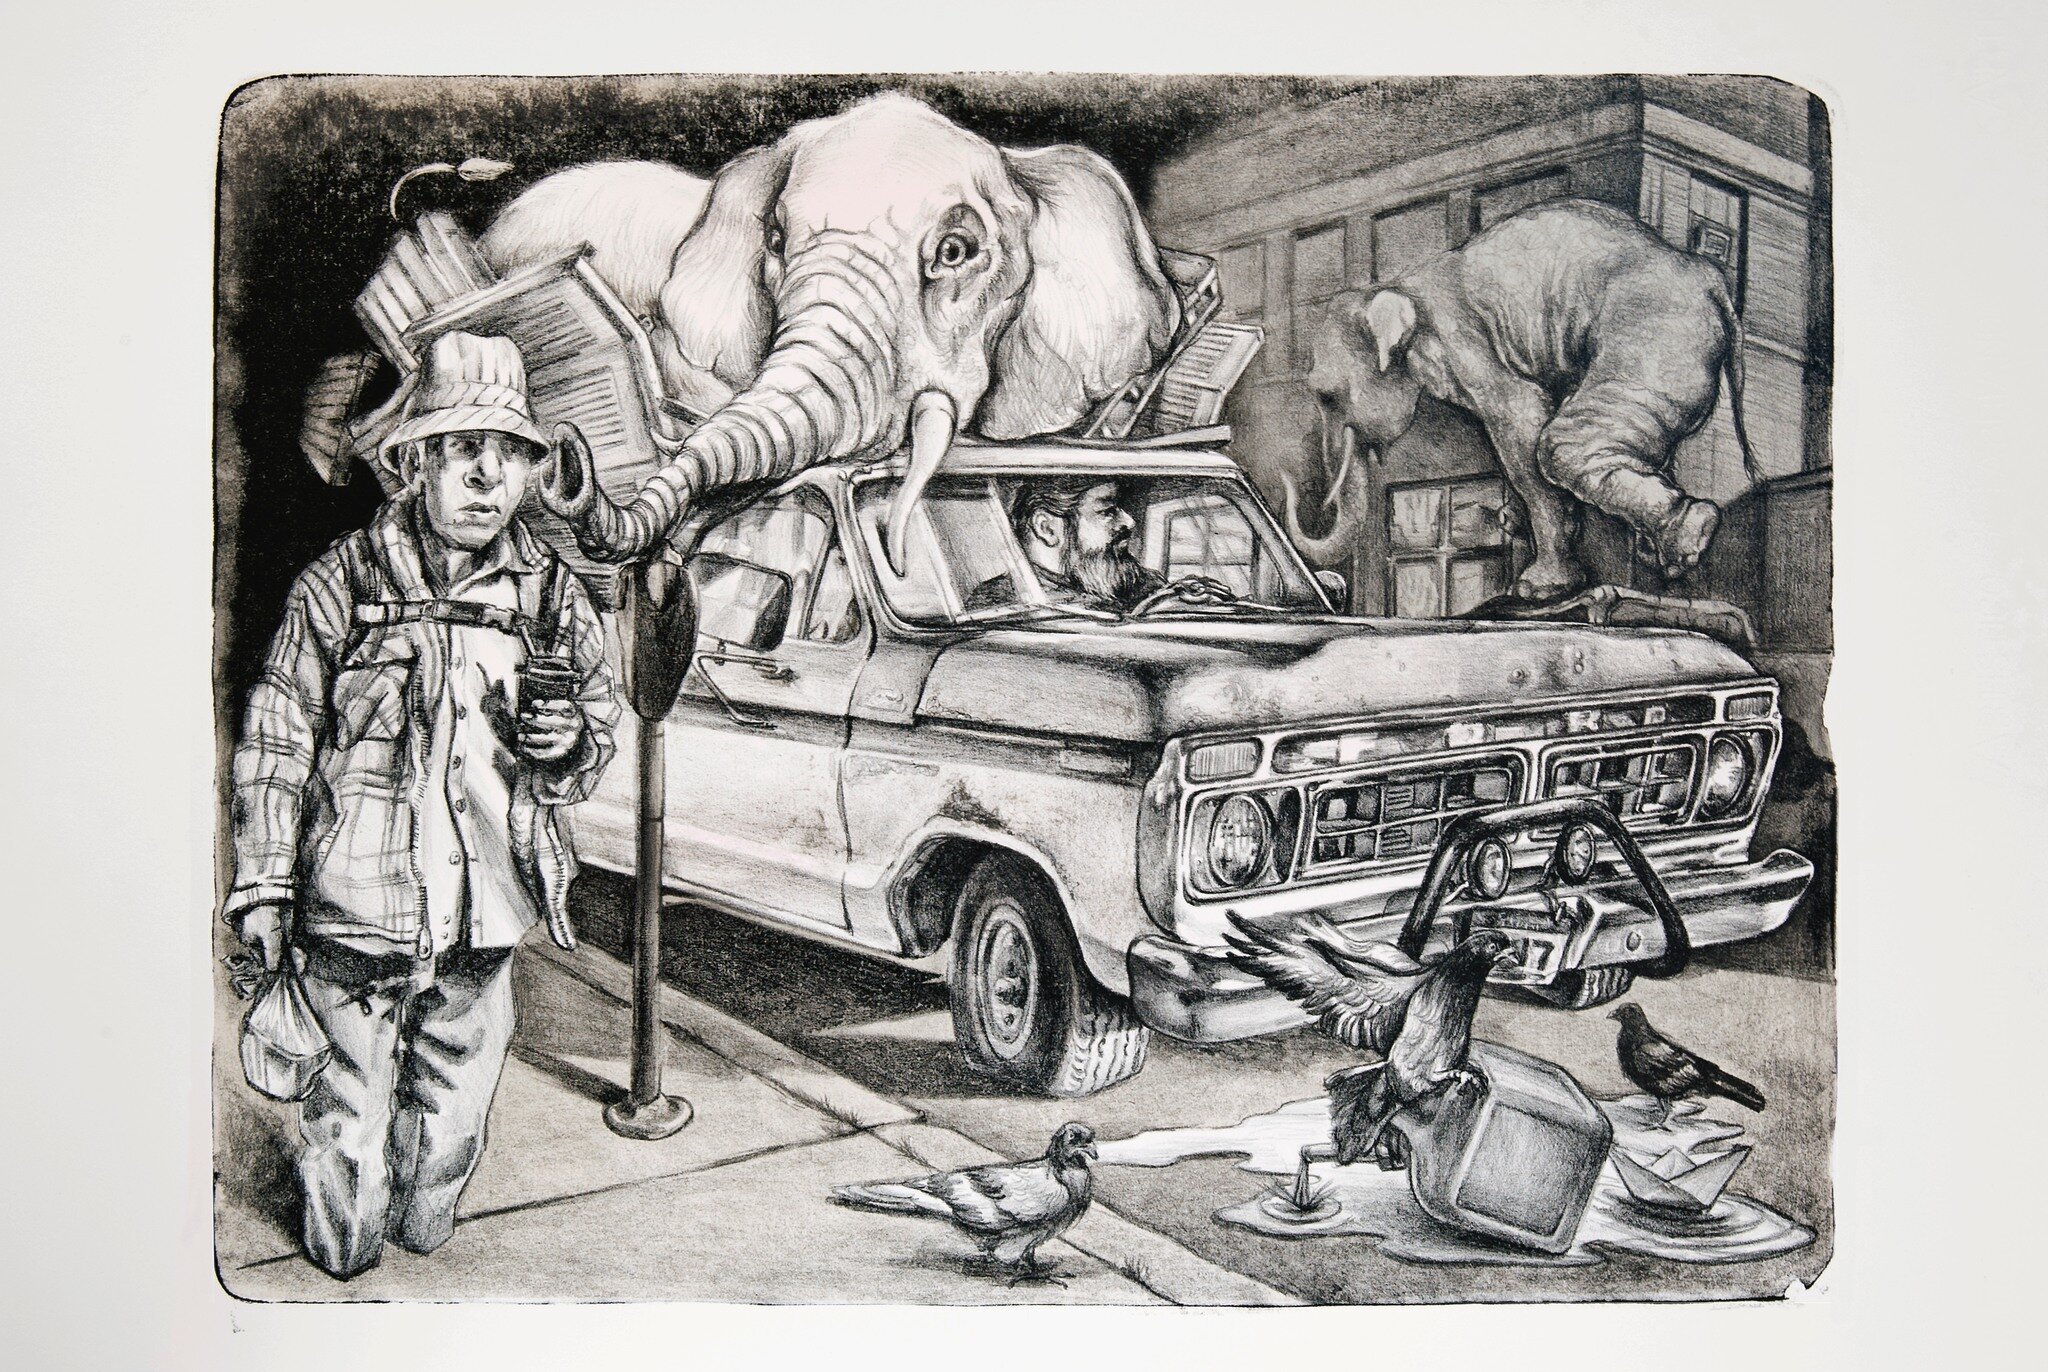 Francisco Delgado
&quot;American Graffiti-White Elephant&quot;
2017
Color stone lithograph
Image size: 18 x 24 inches
Paper size: 22 x 30 inches
Paper:  Fabriano artistico
$800

Francisco Delgado (b. 1974) was born in Cuidad Ju&aacute;rez and grew
up